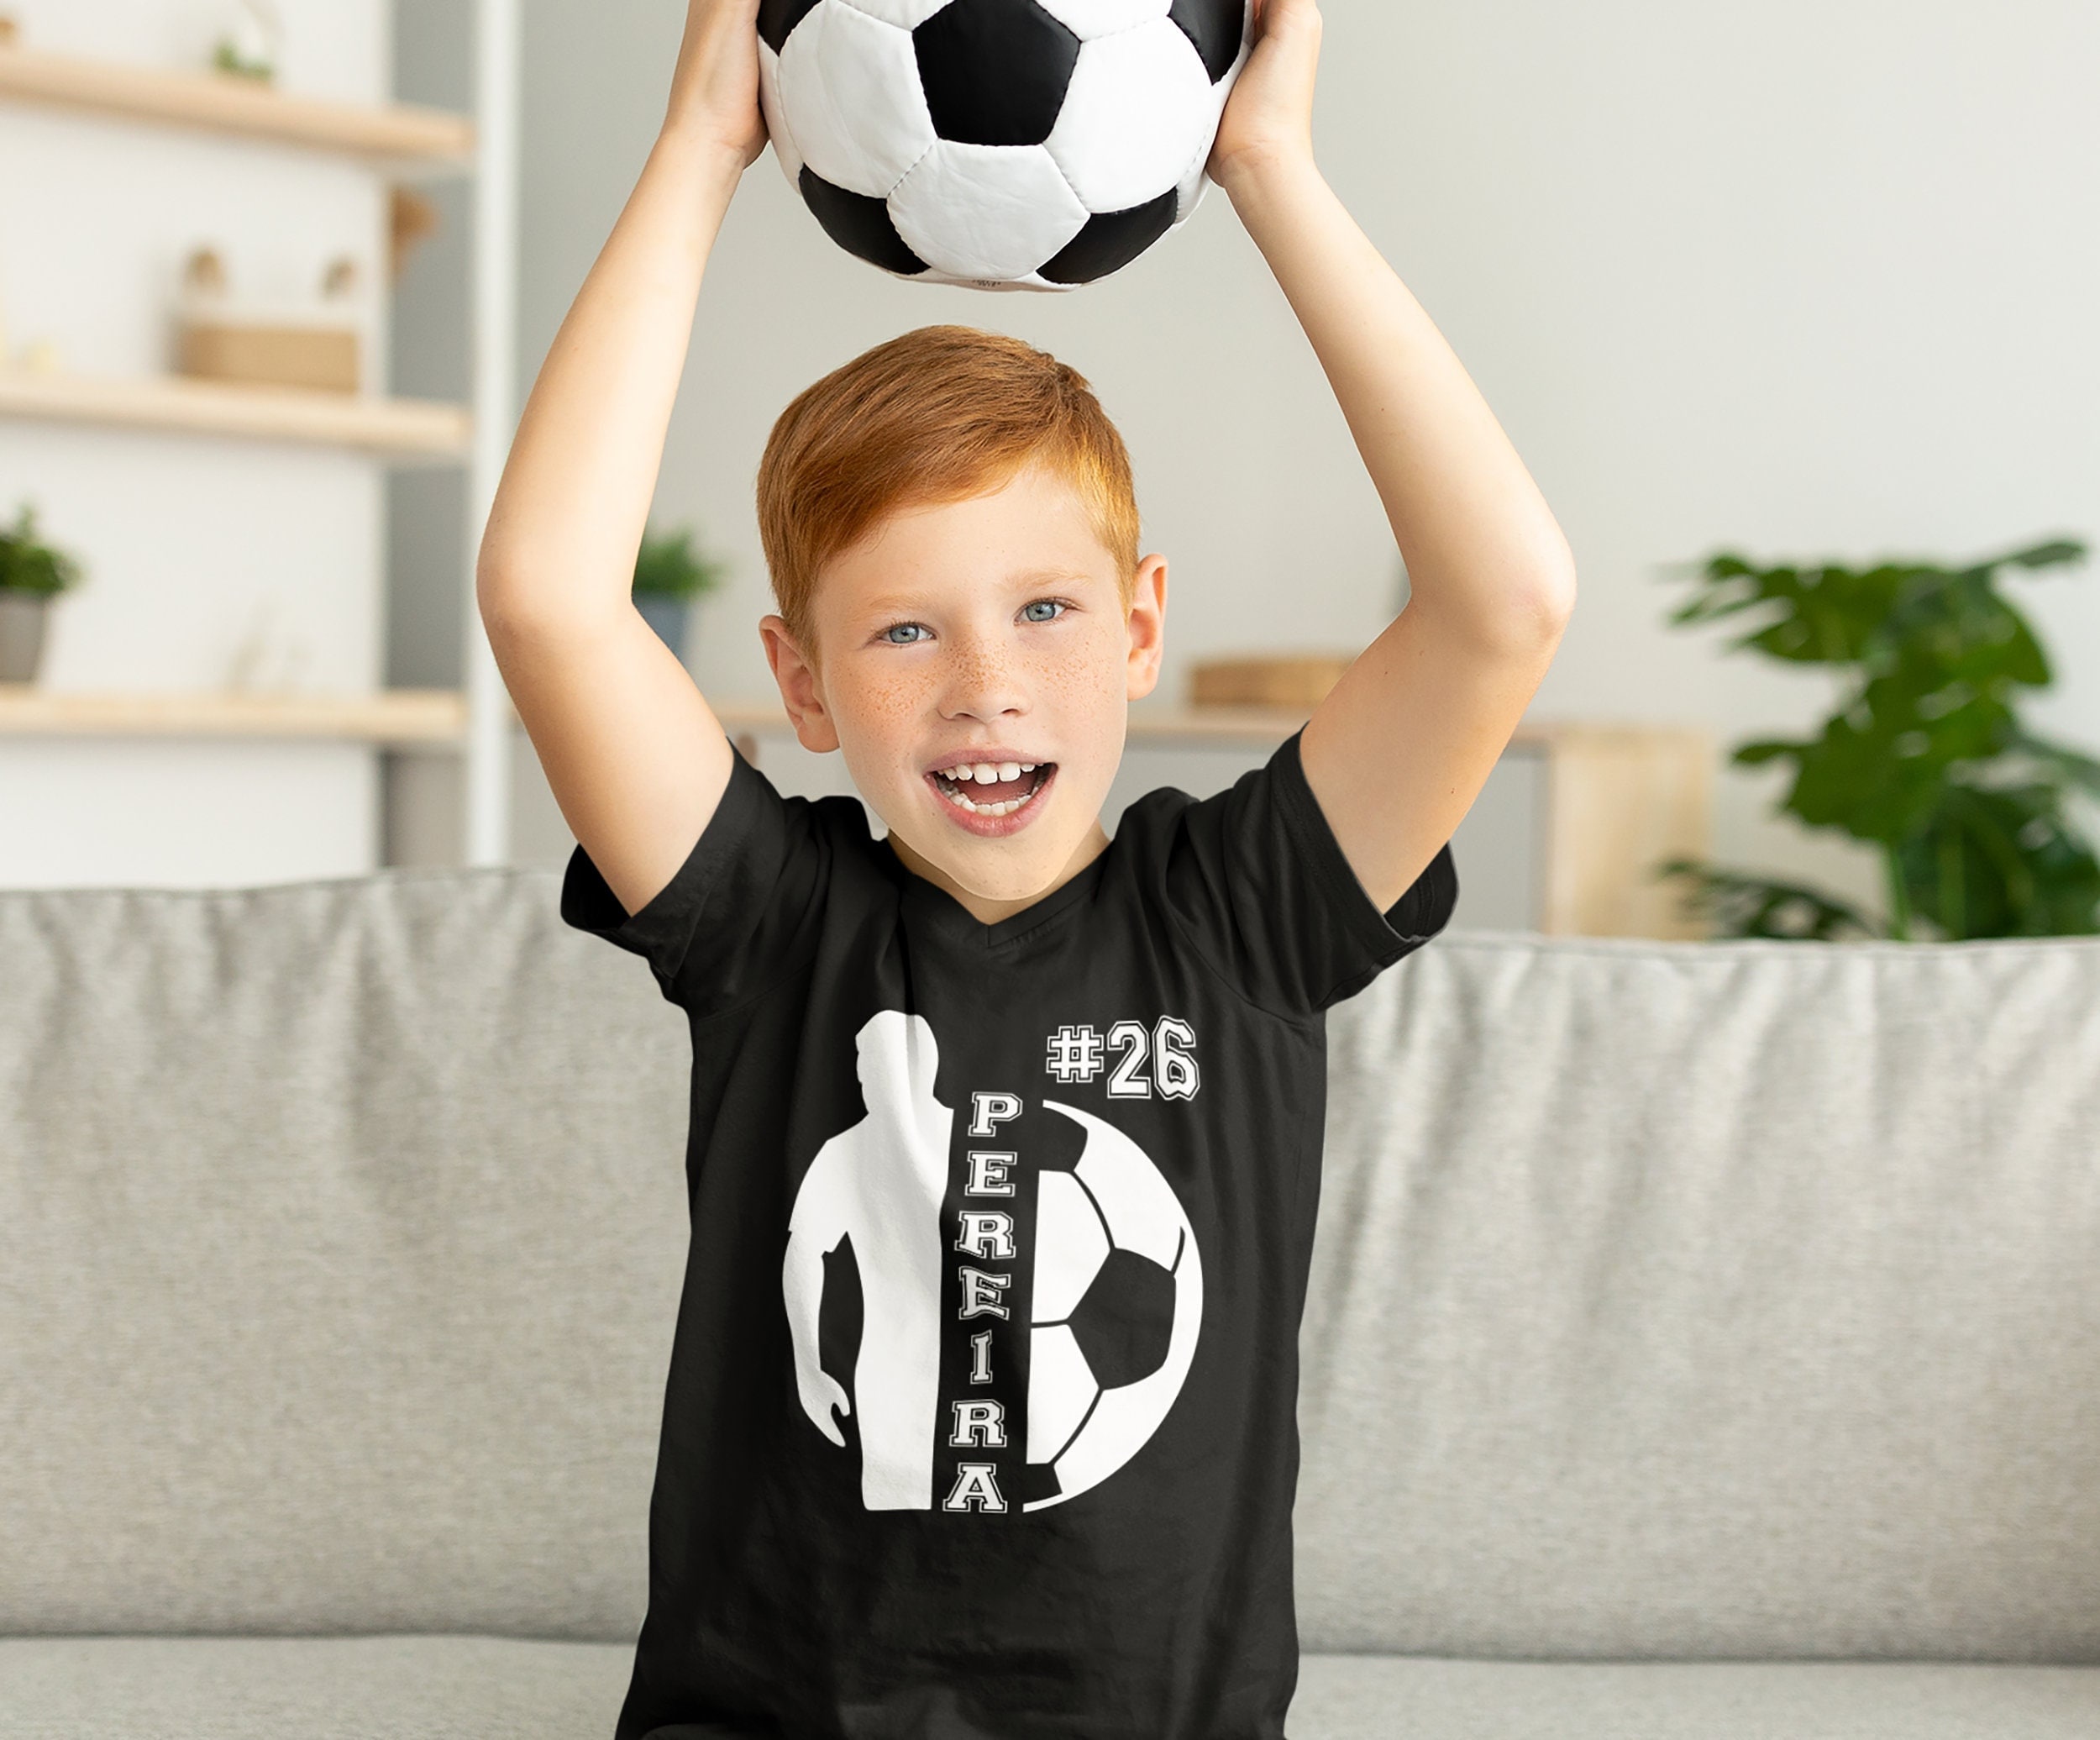 Football Kits  Soccer shirts, Soccer uniforms design, Sports